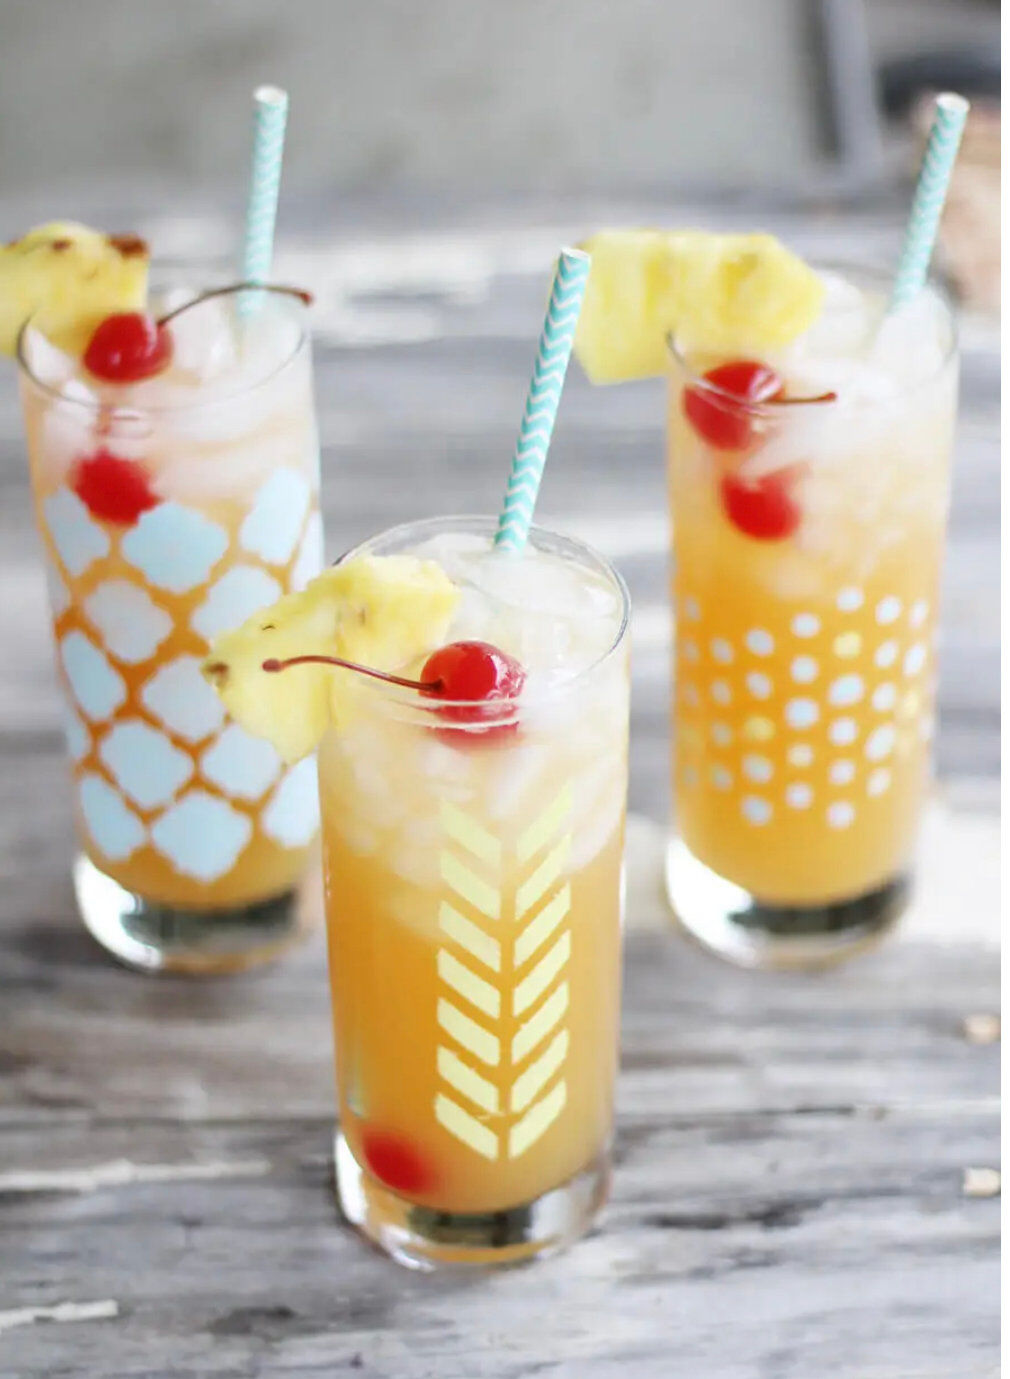  Vintage stenciled lemonade glasses with straws